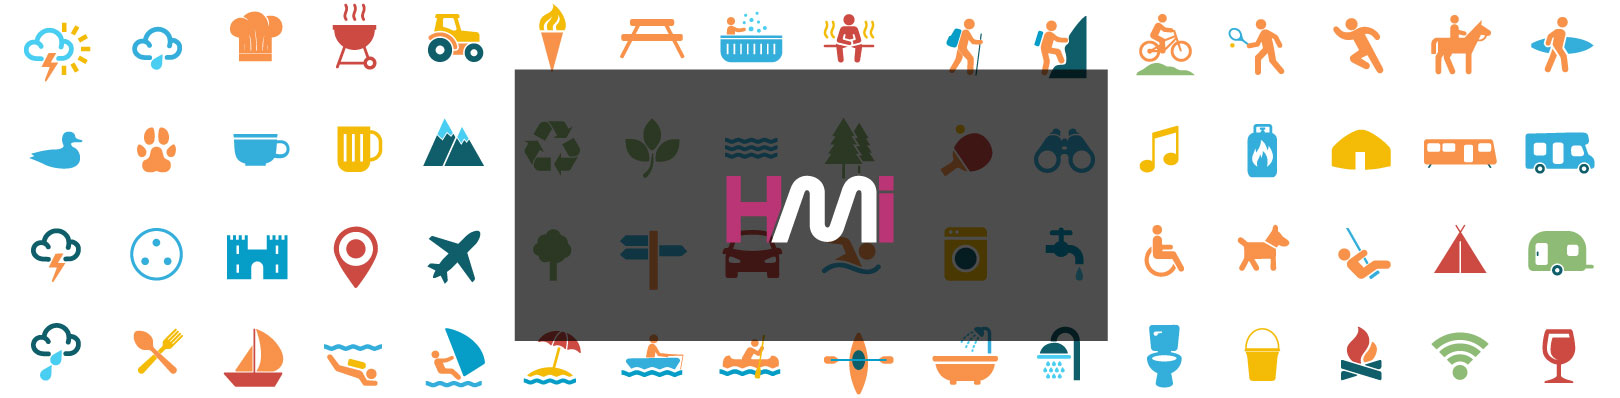 Icon Designing at HMi GmbH | start professional marketing in Germany on hmi-ad website | HMi-ad graphic team offer professional Designing services in Germany